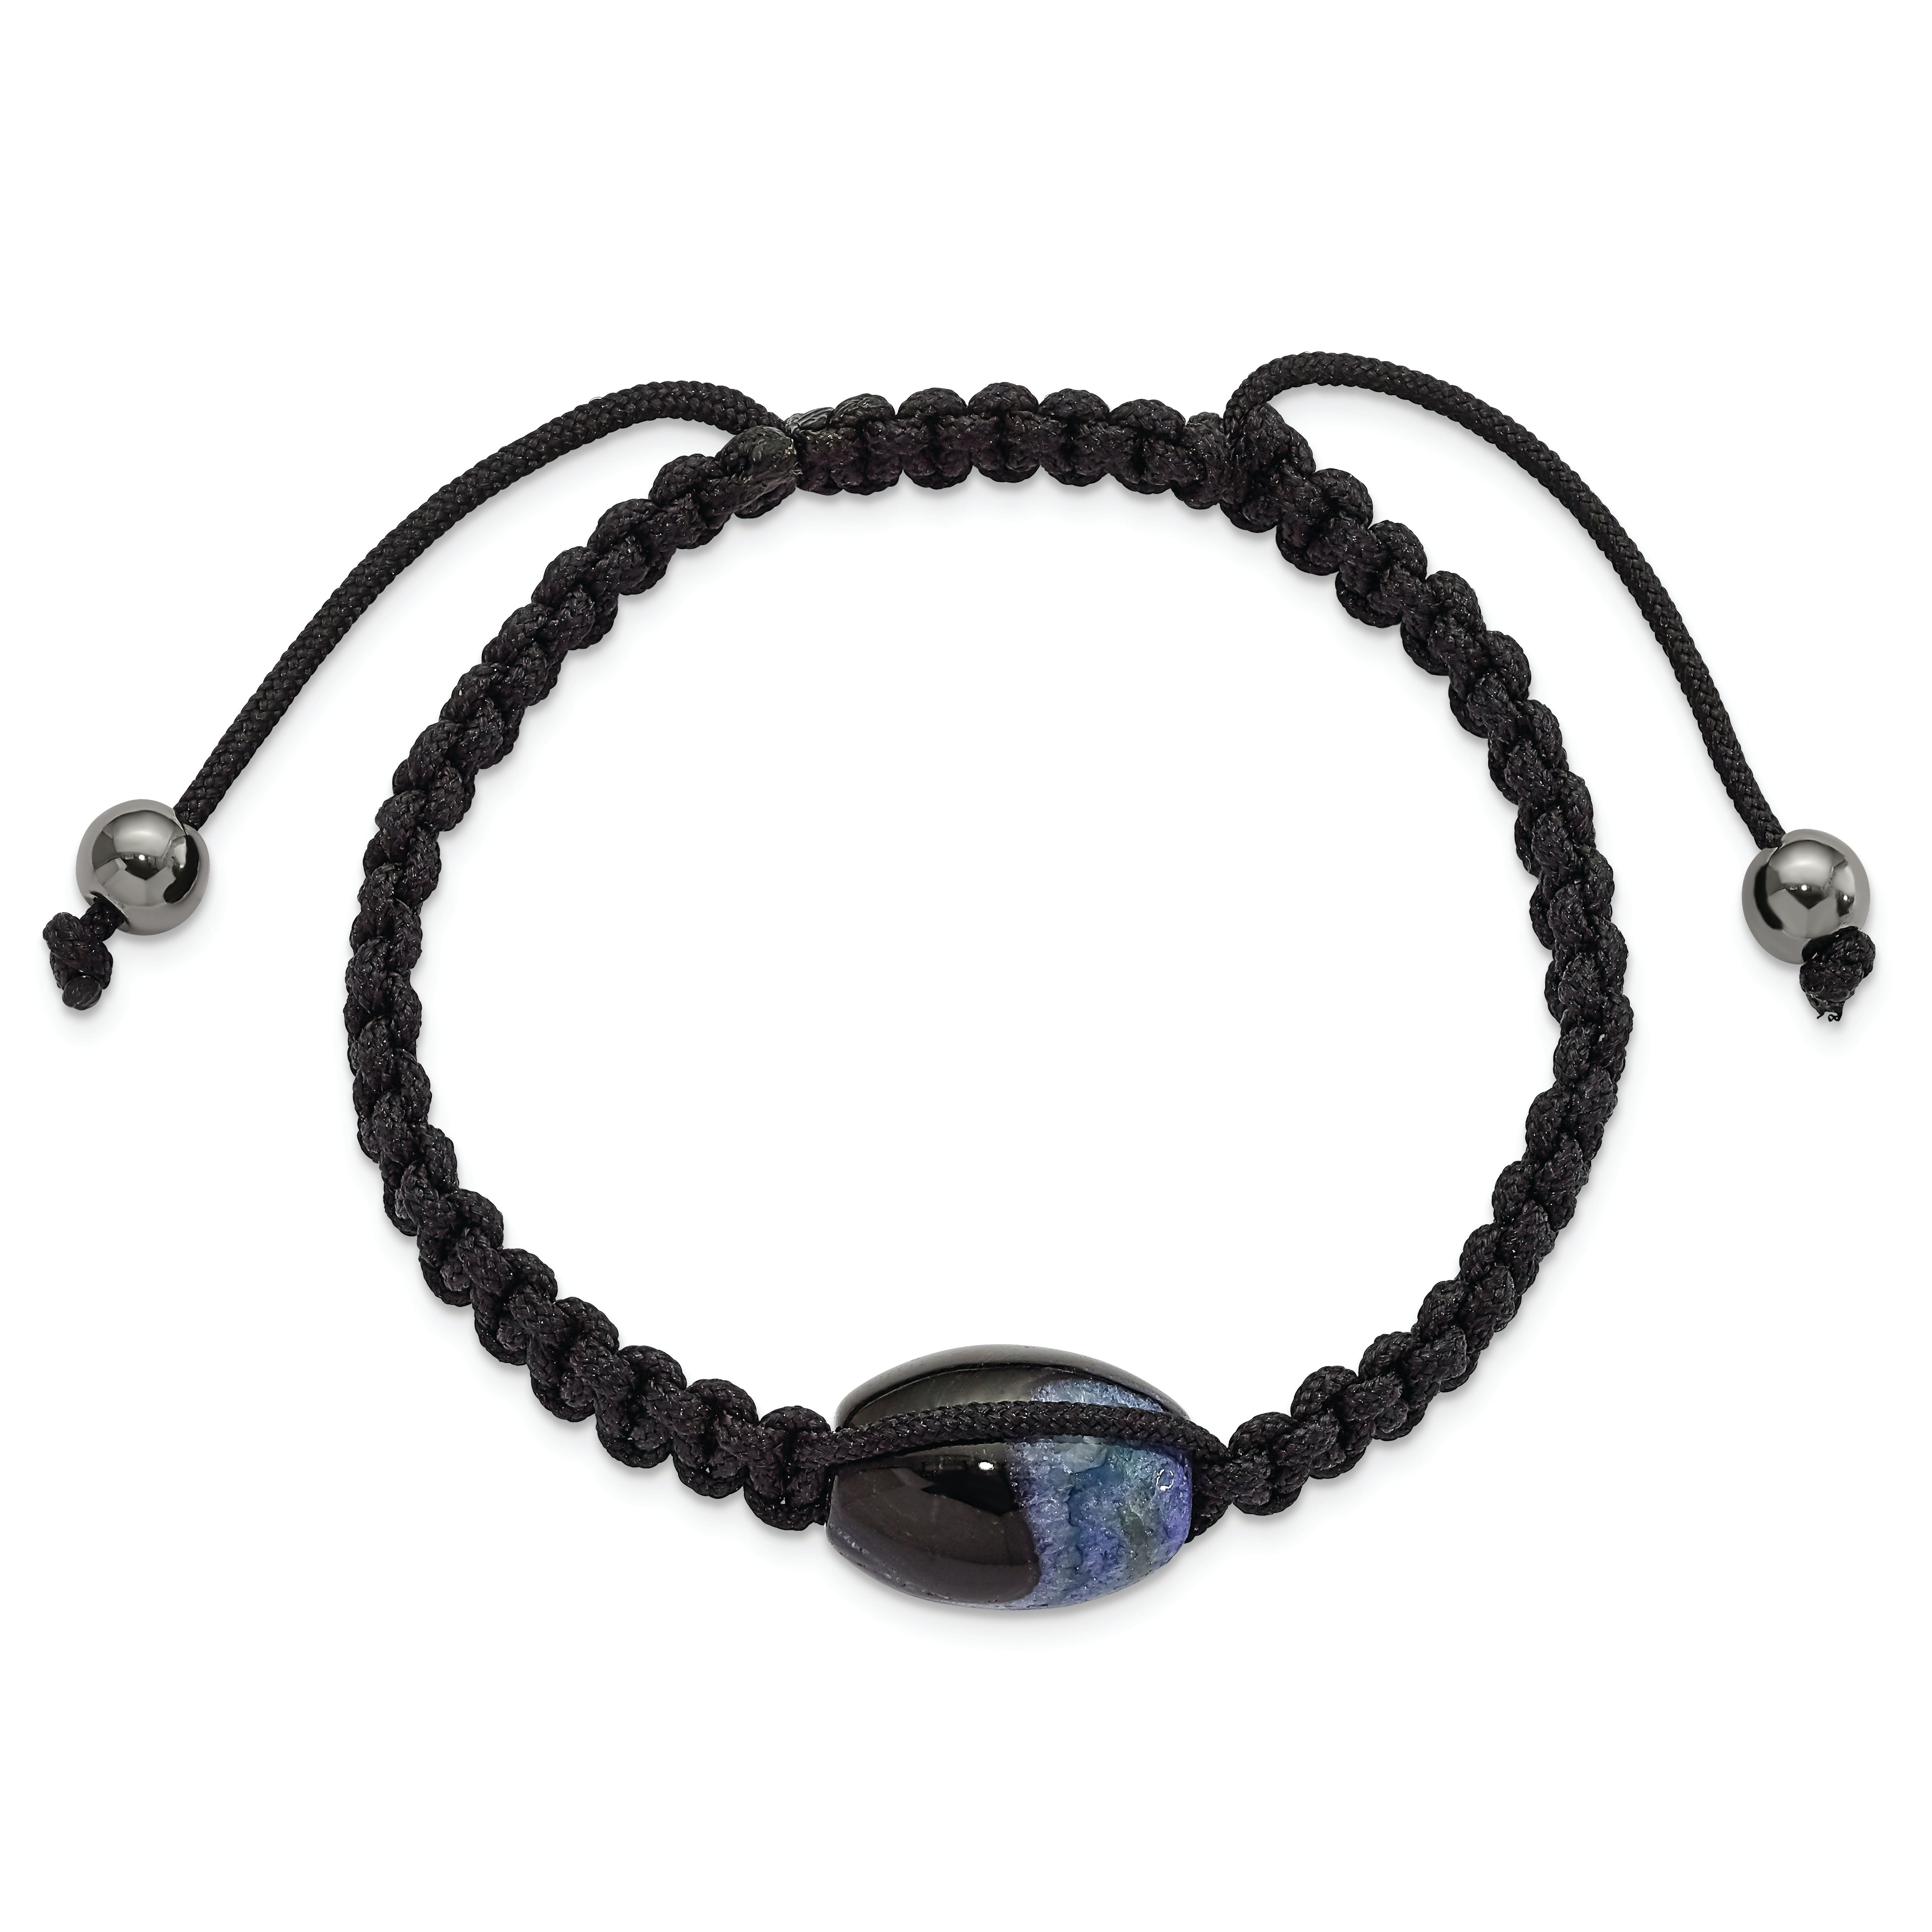 13x19mm Blue Crystal Agate w/ Hematite Beads Black Cord Bracelet